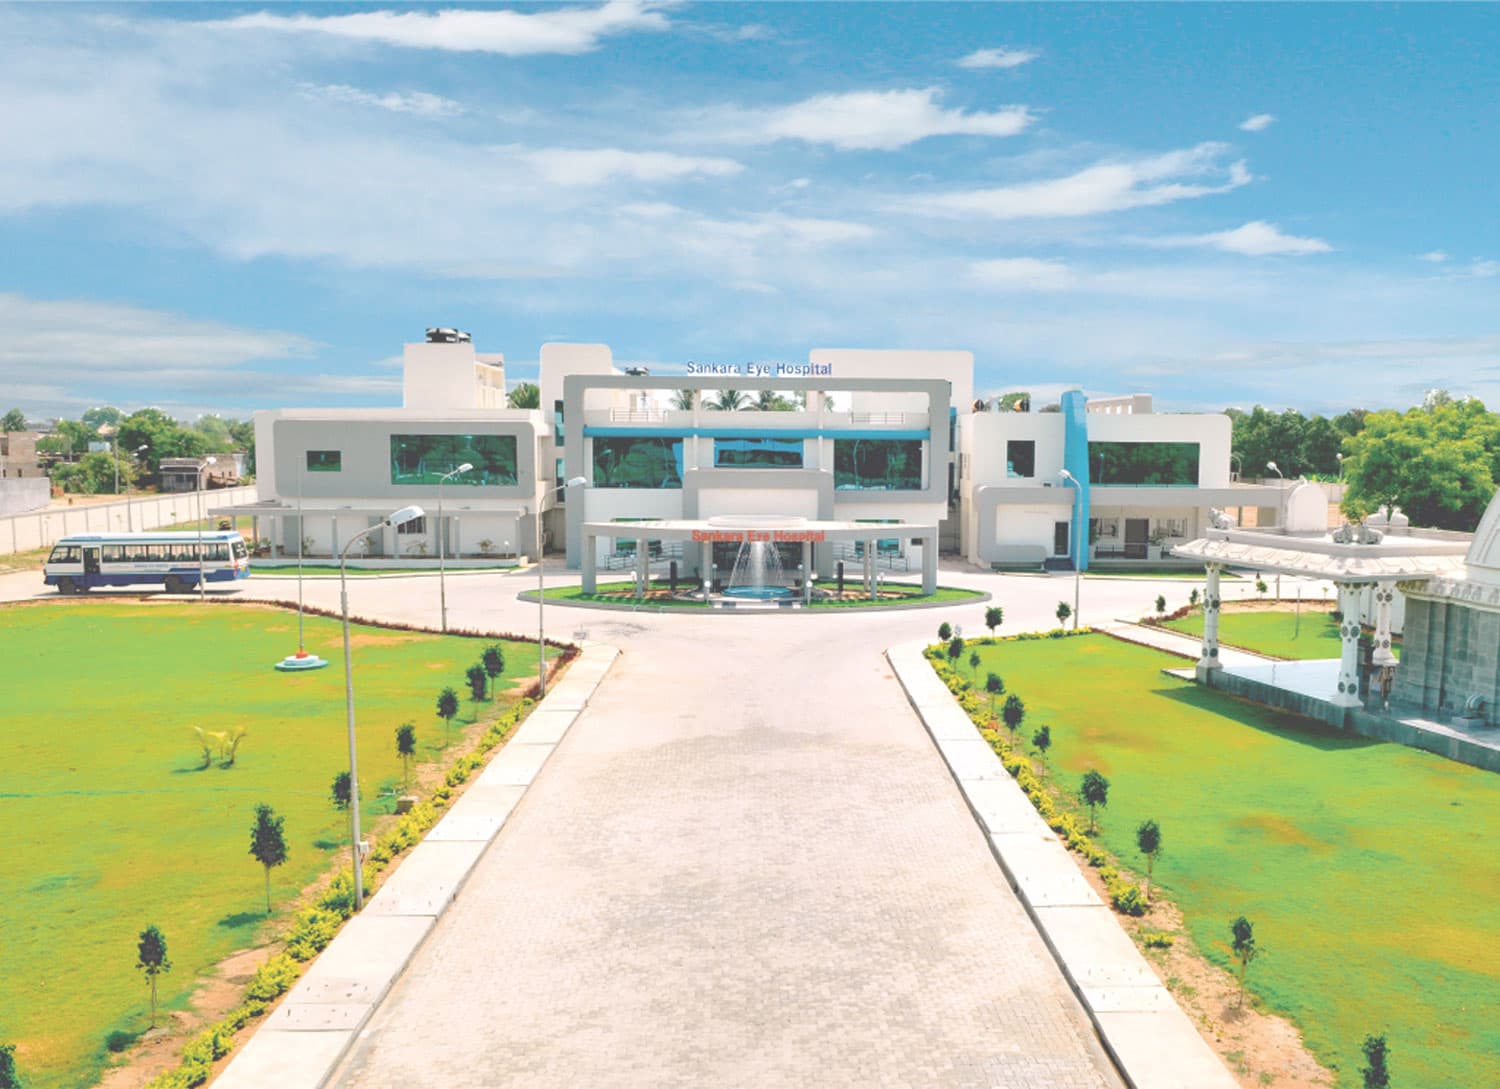 Sankara eye specialty hospital located in anand